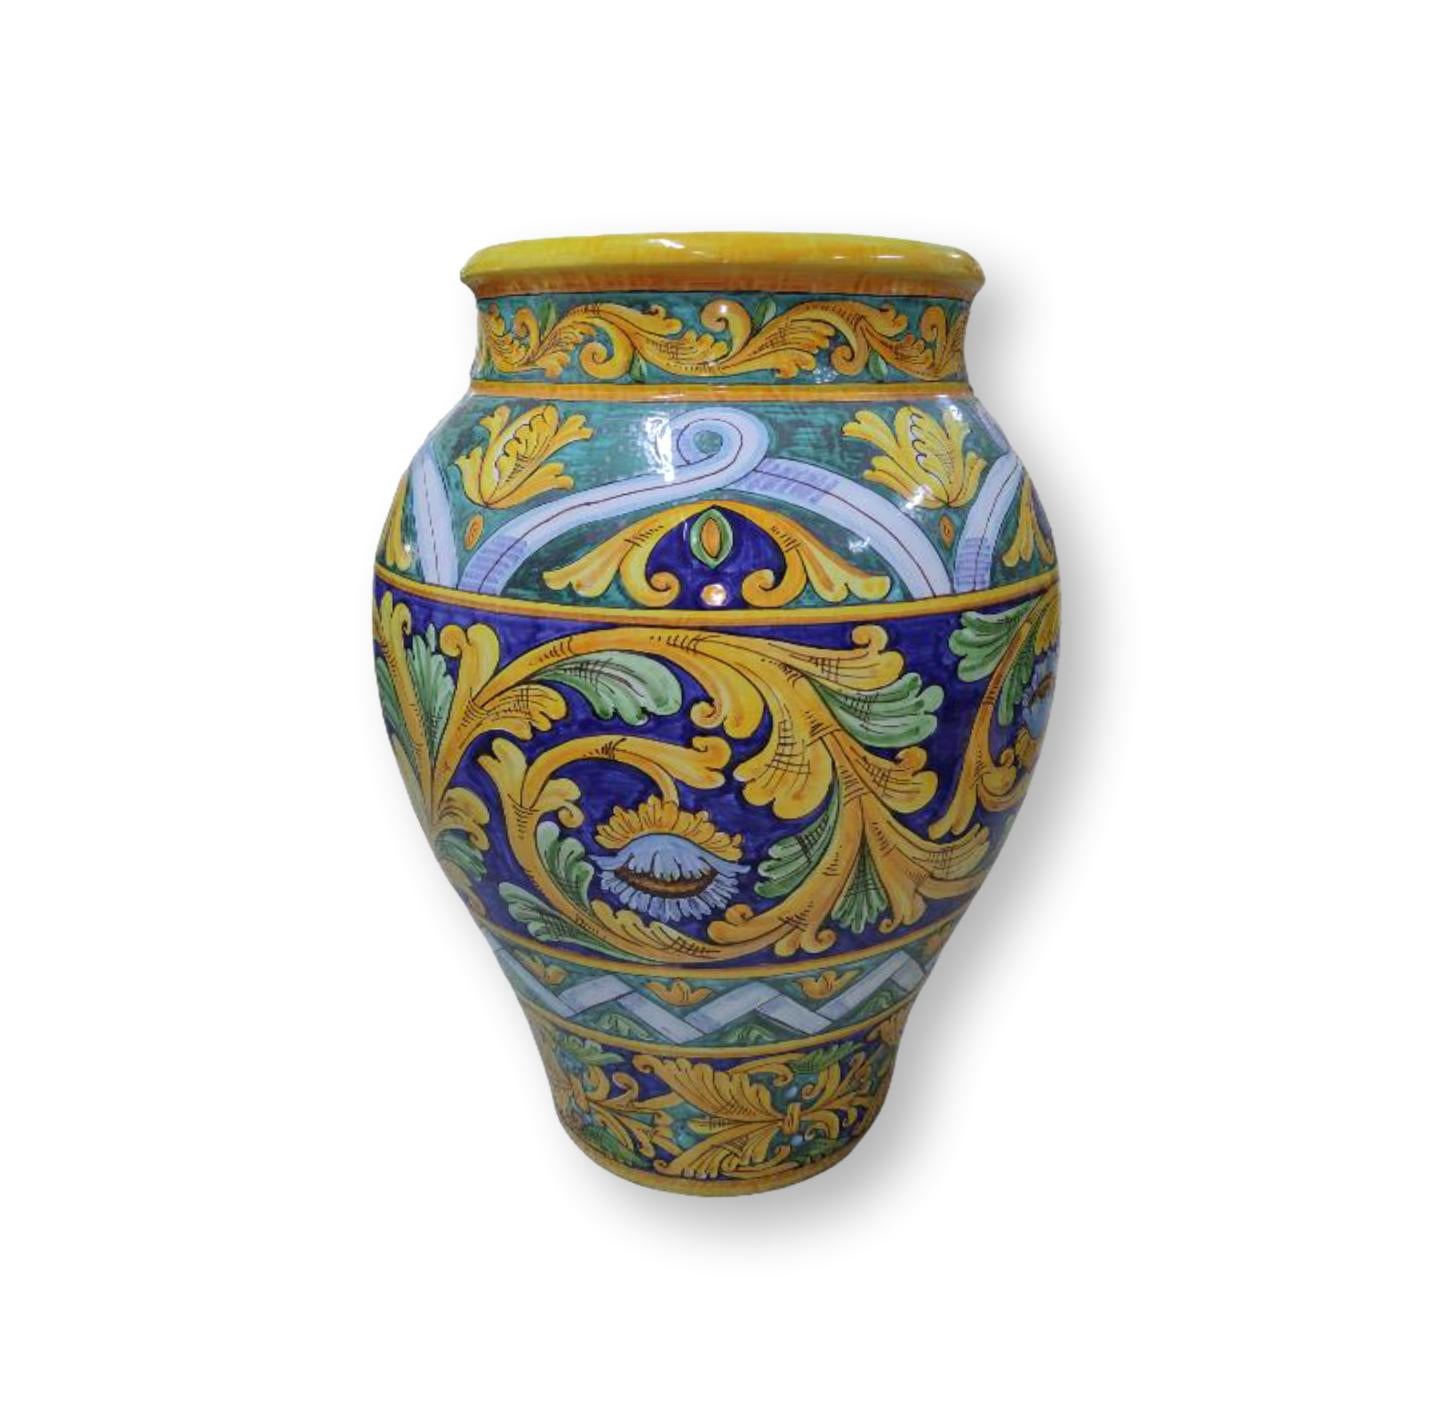 Giara in ceramica dipinta a mano - Ornamento Blu con decori